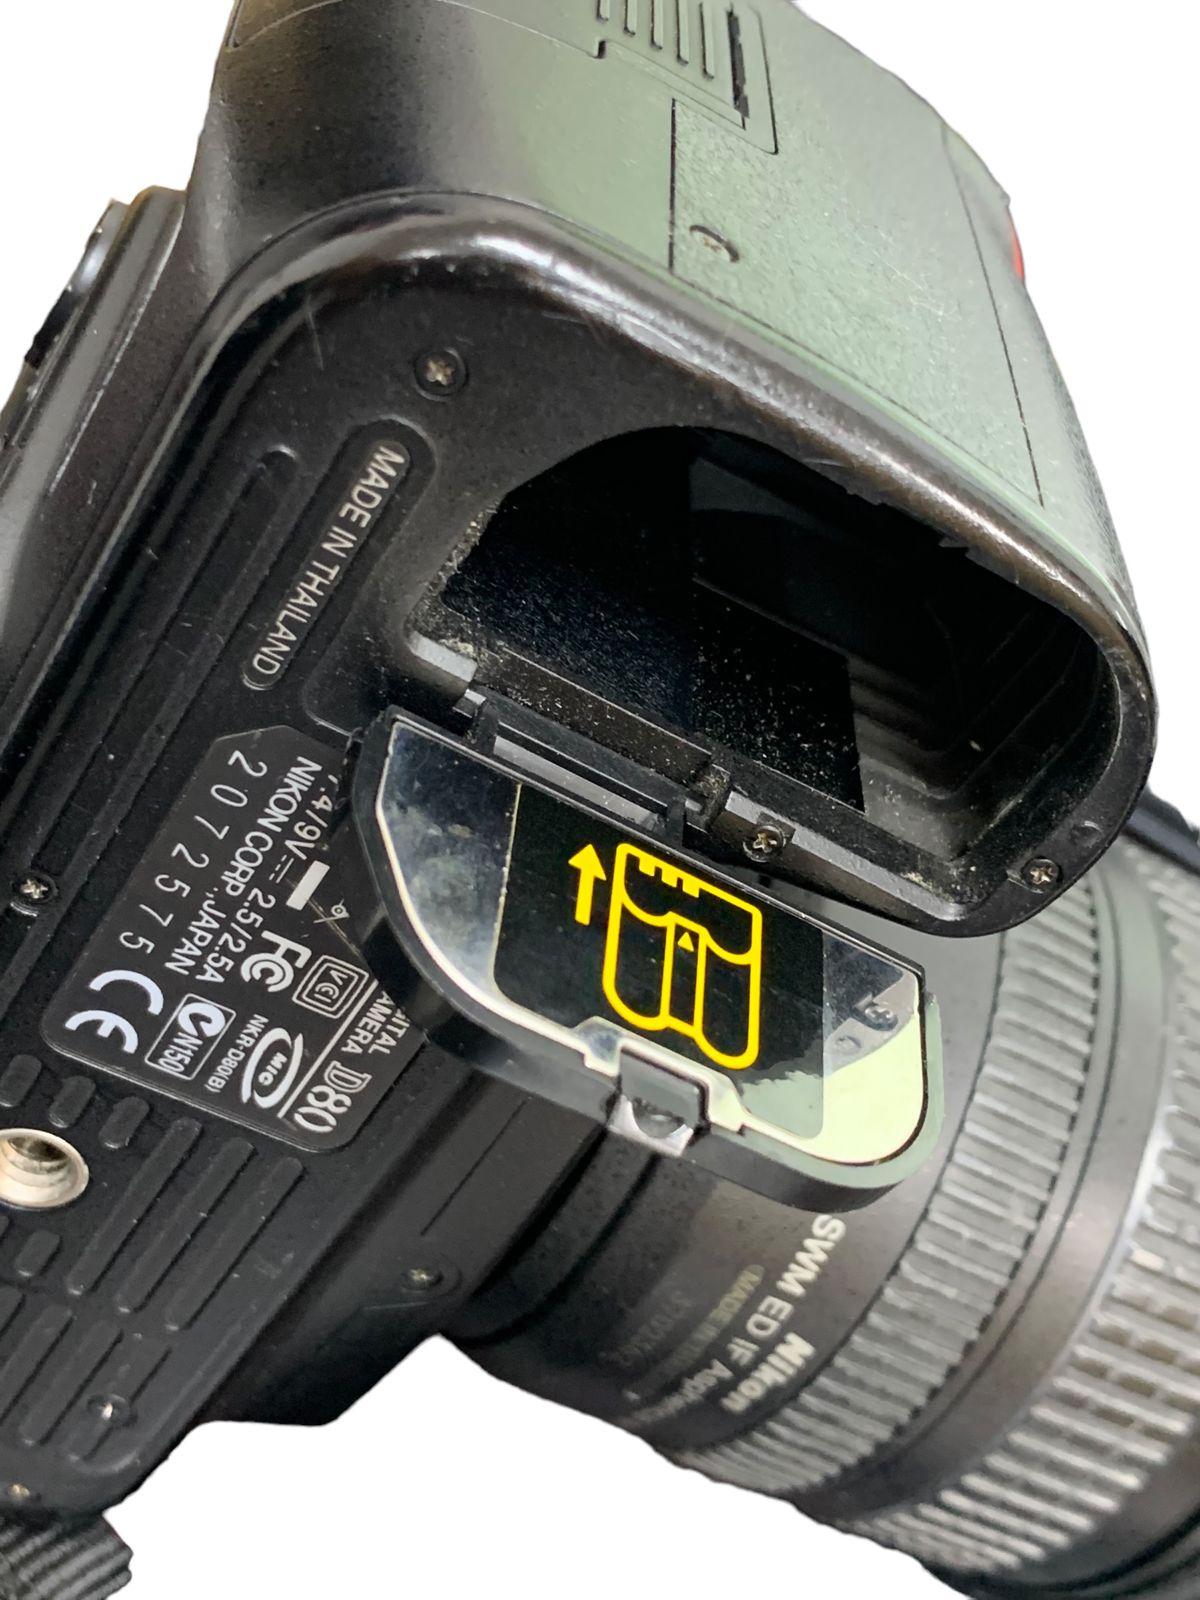 期間限定特売 Nikon D80 動作確認済み | solinvet.com